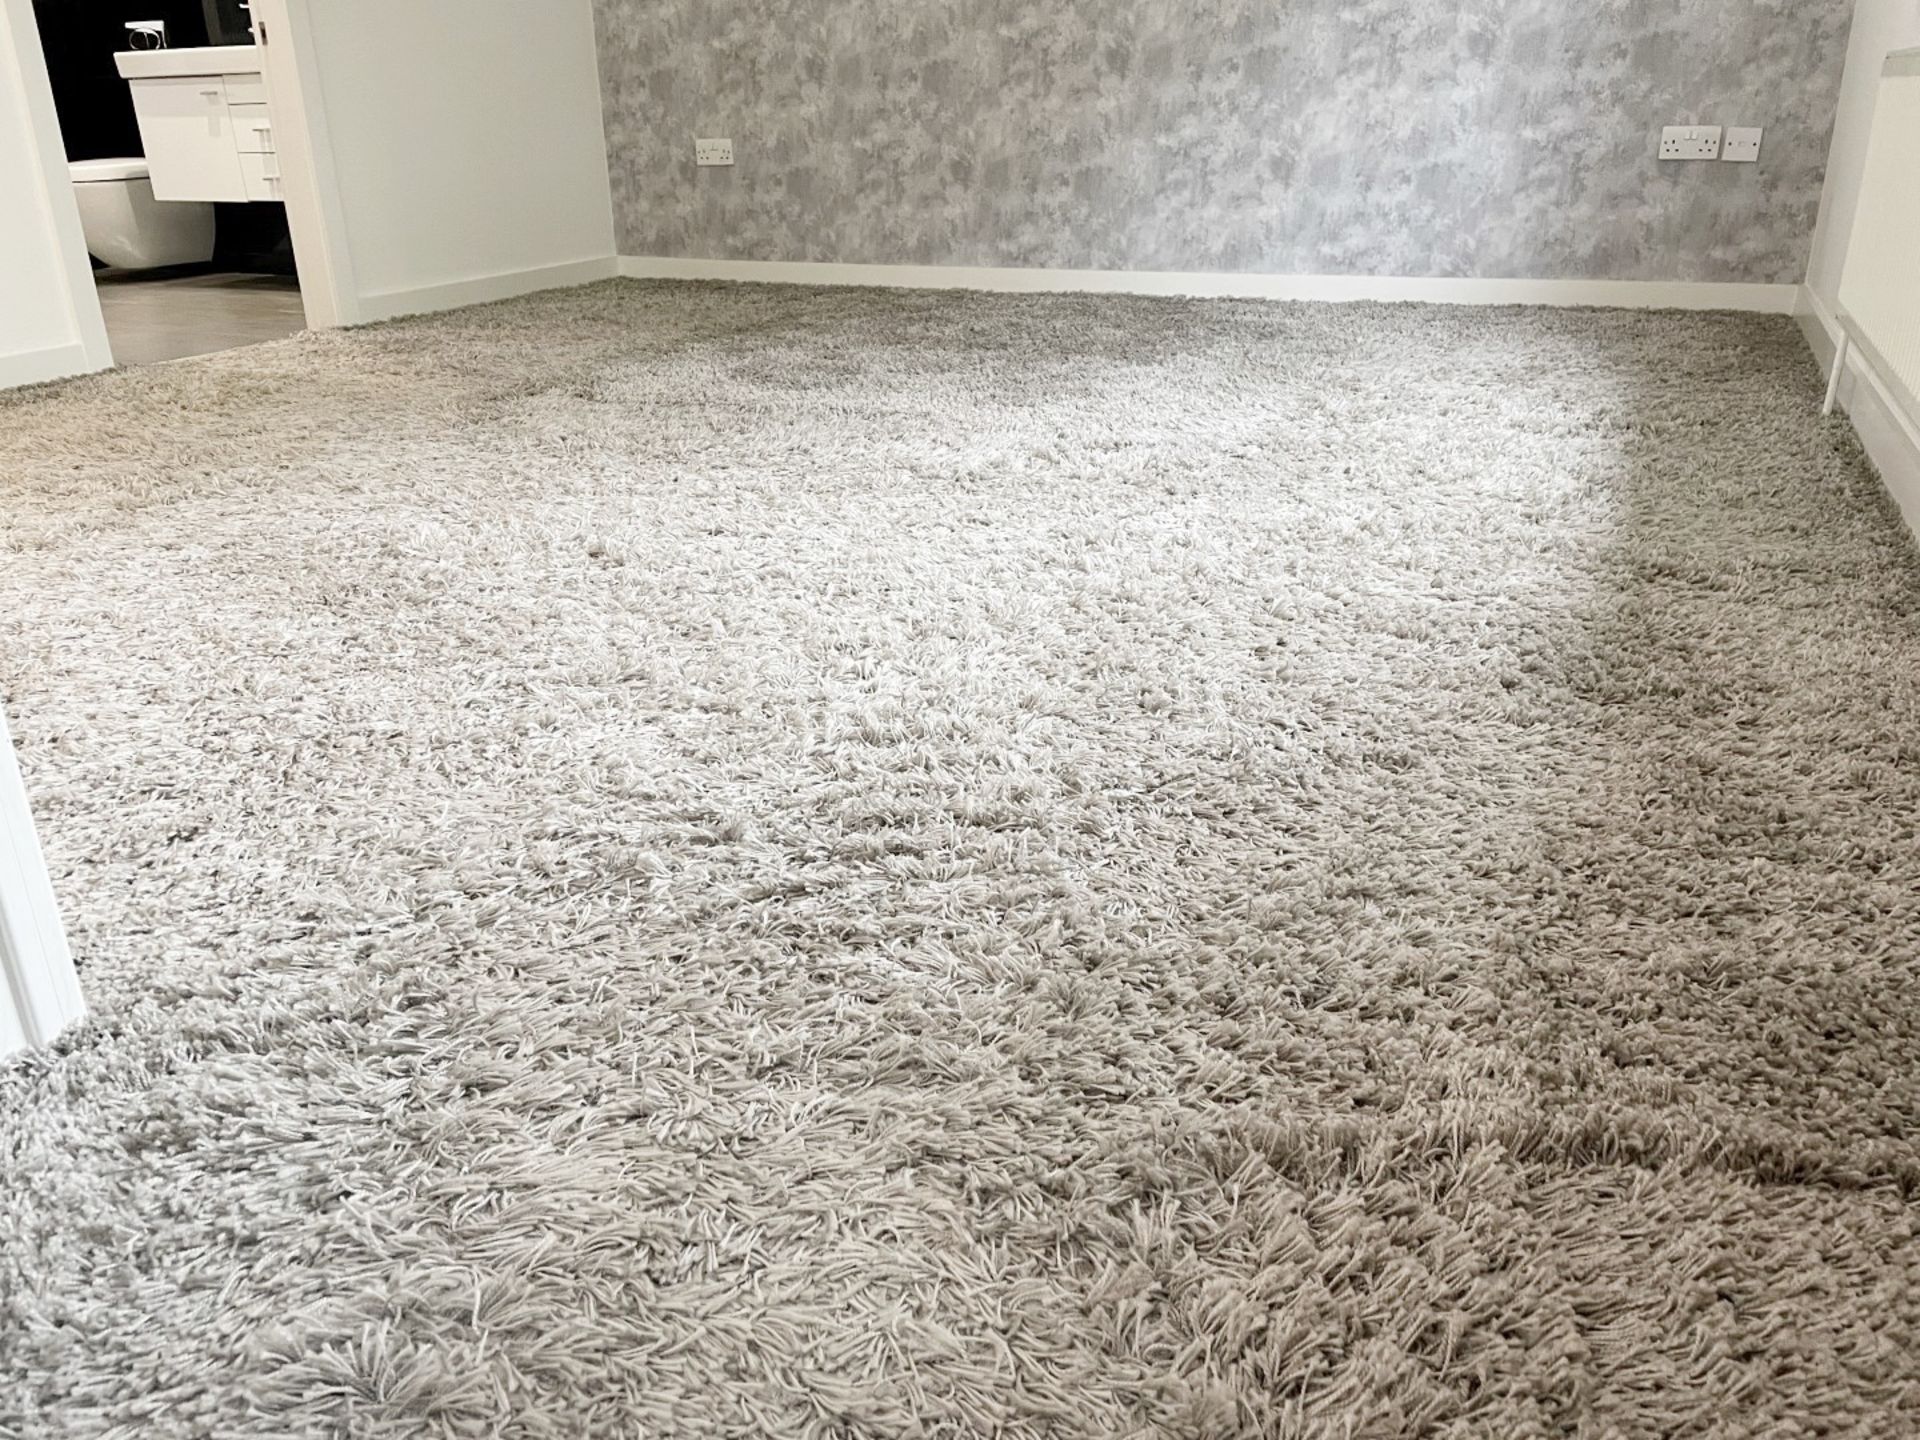 1 x Premium Fitted SHAGPILE Bedroom Carpet In Grey (4.6 x 3.9m) - Ref: FRNT-BD(B)SHG/1stFLR -